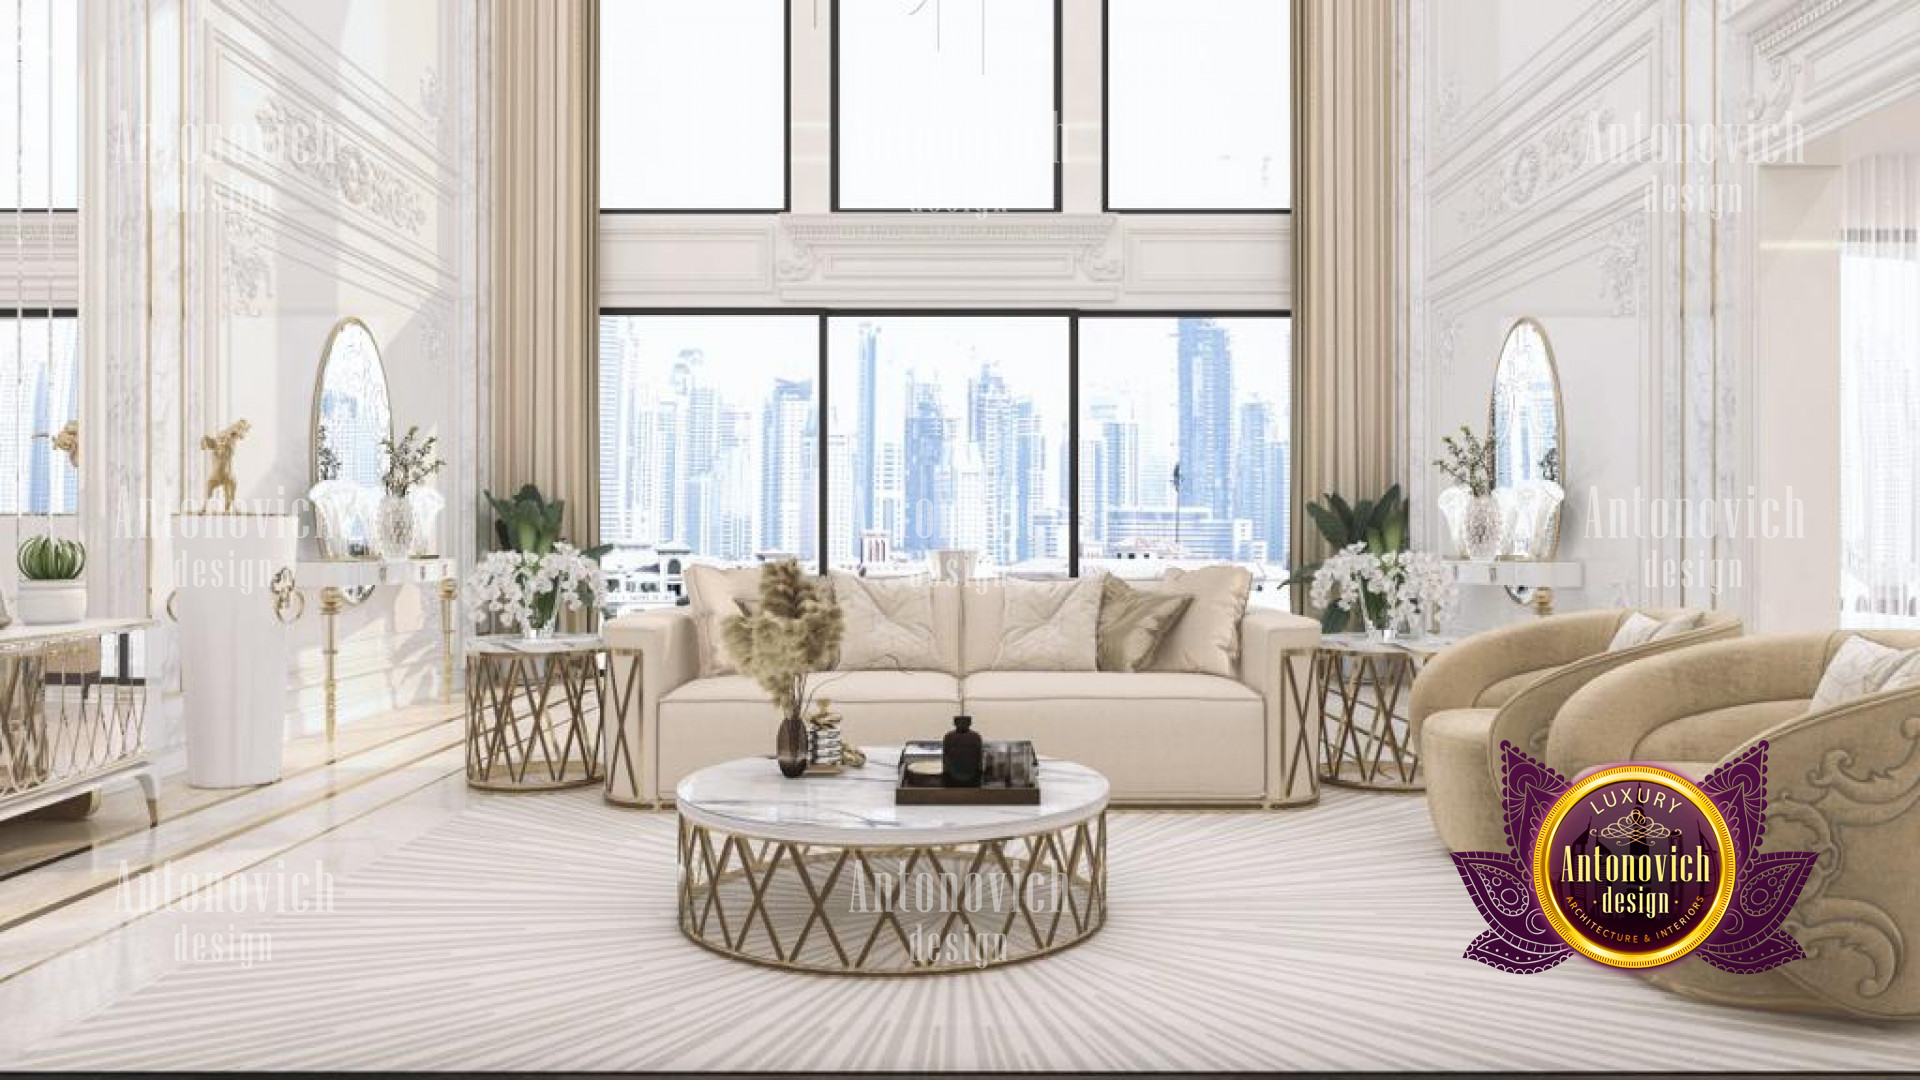 Luxurious Furniture For 22 Carat Villa Design The Palm